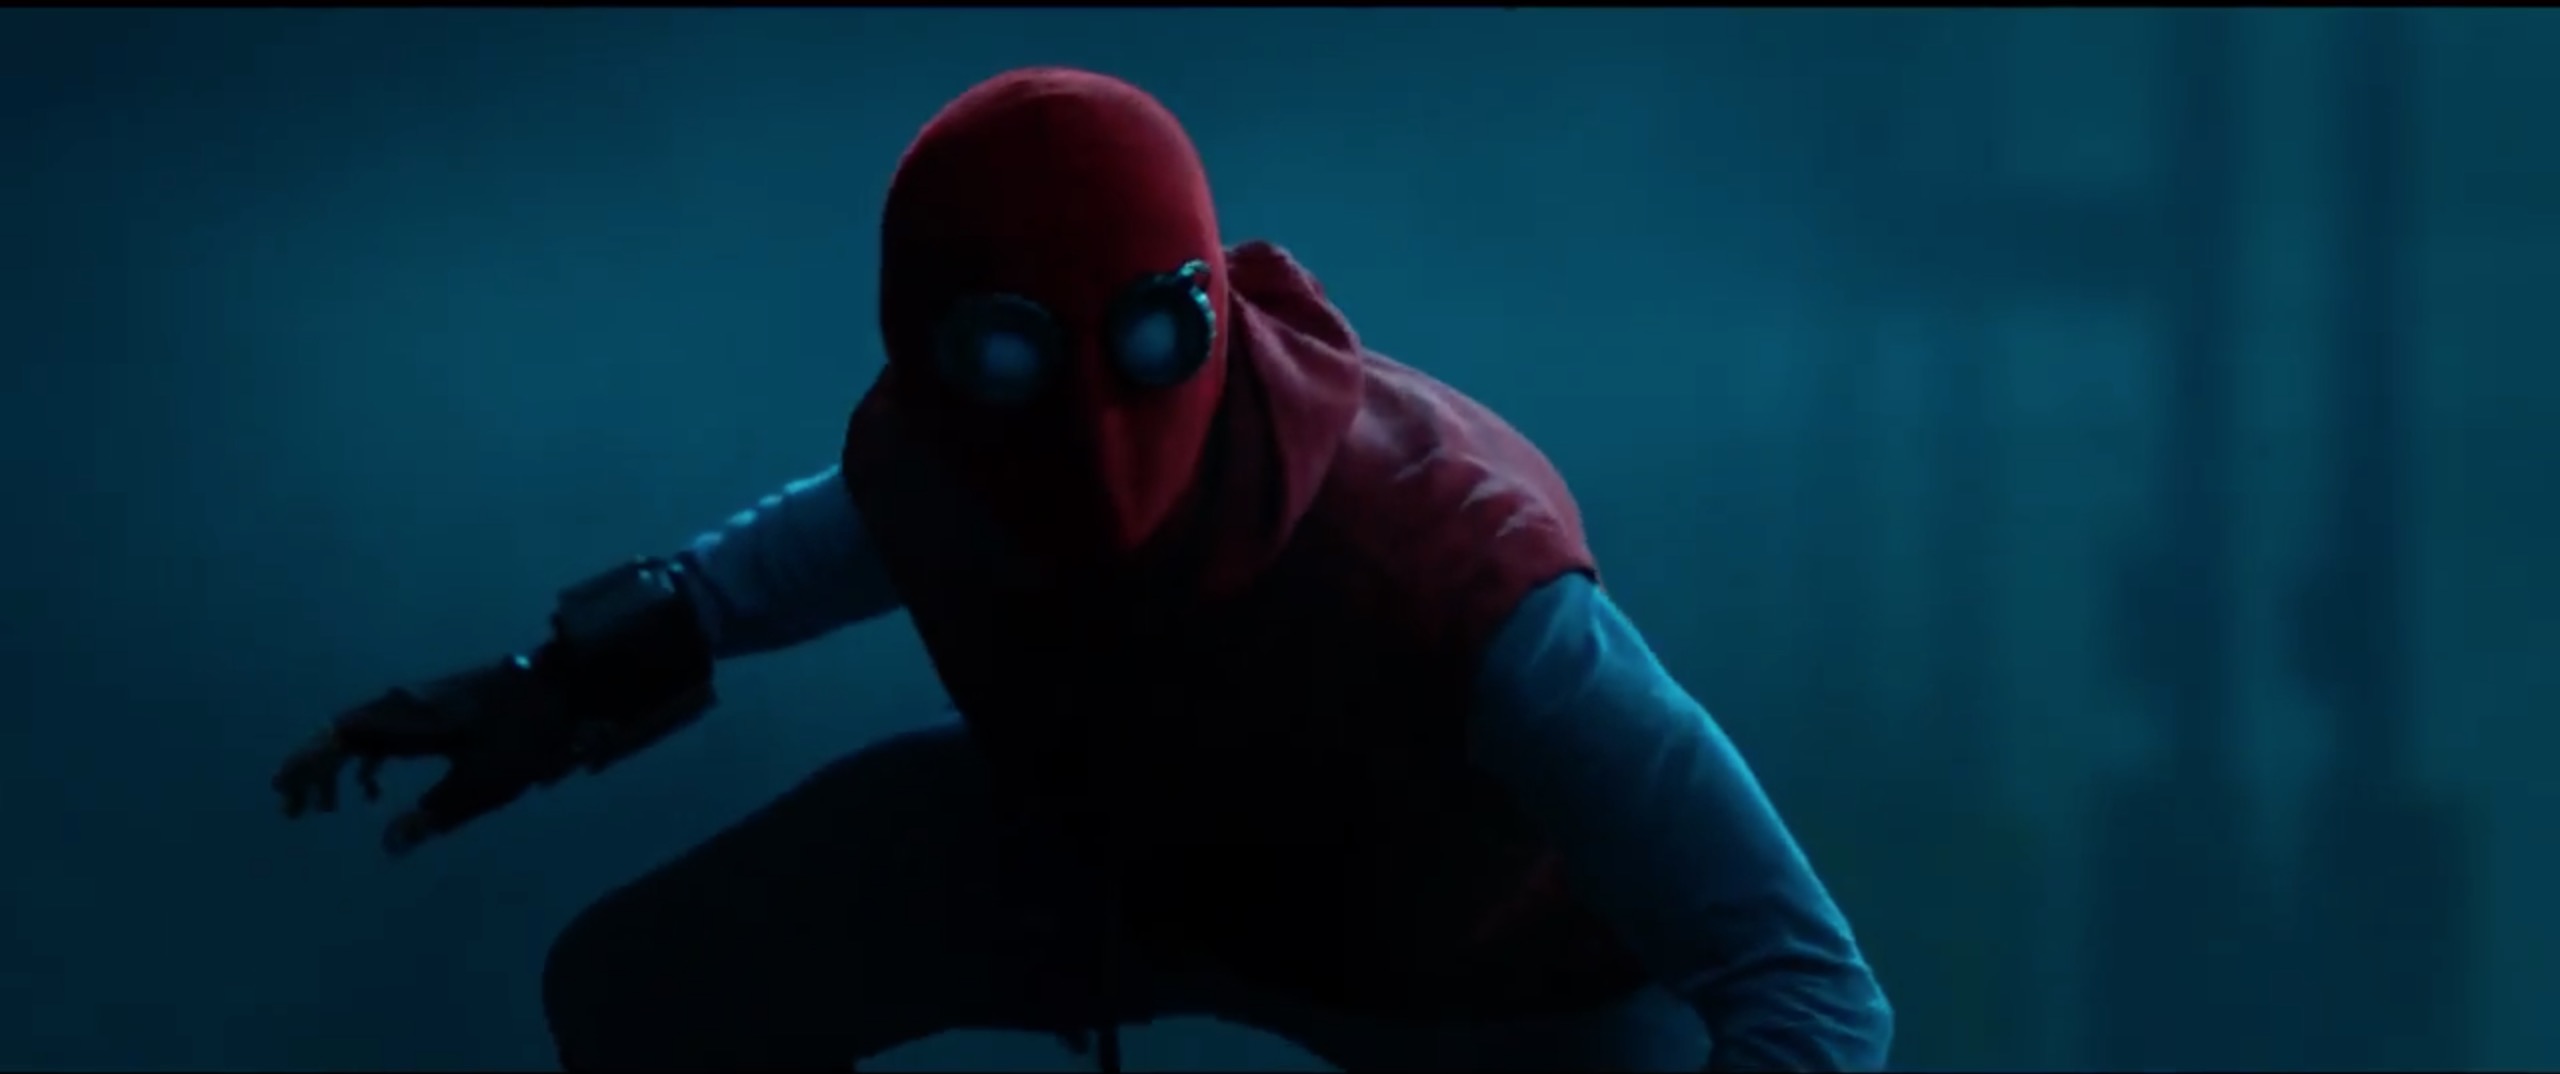 Spider-Man Homecoming Trailer Breakdown
